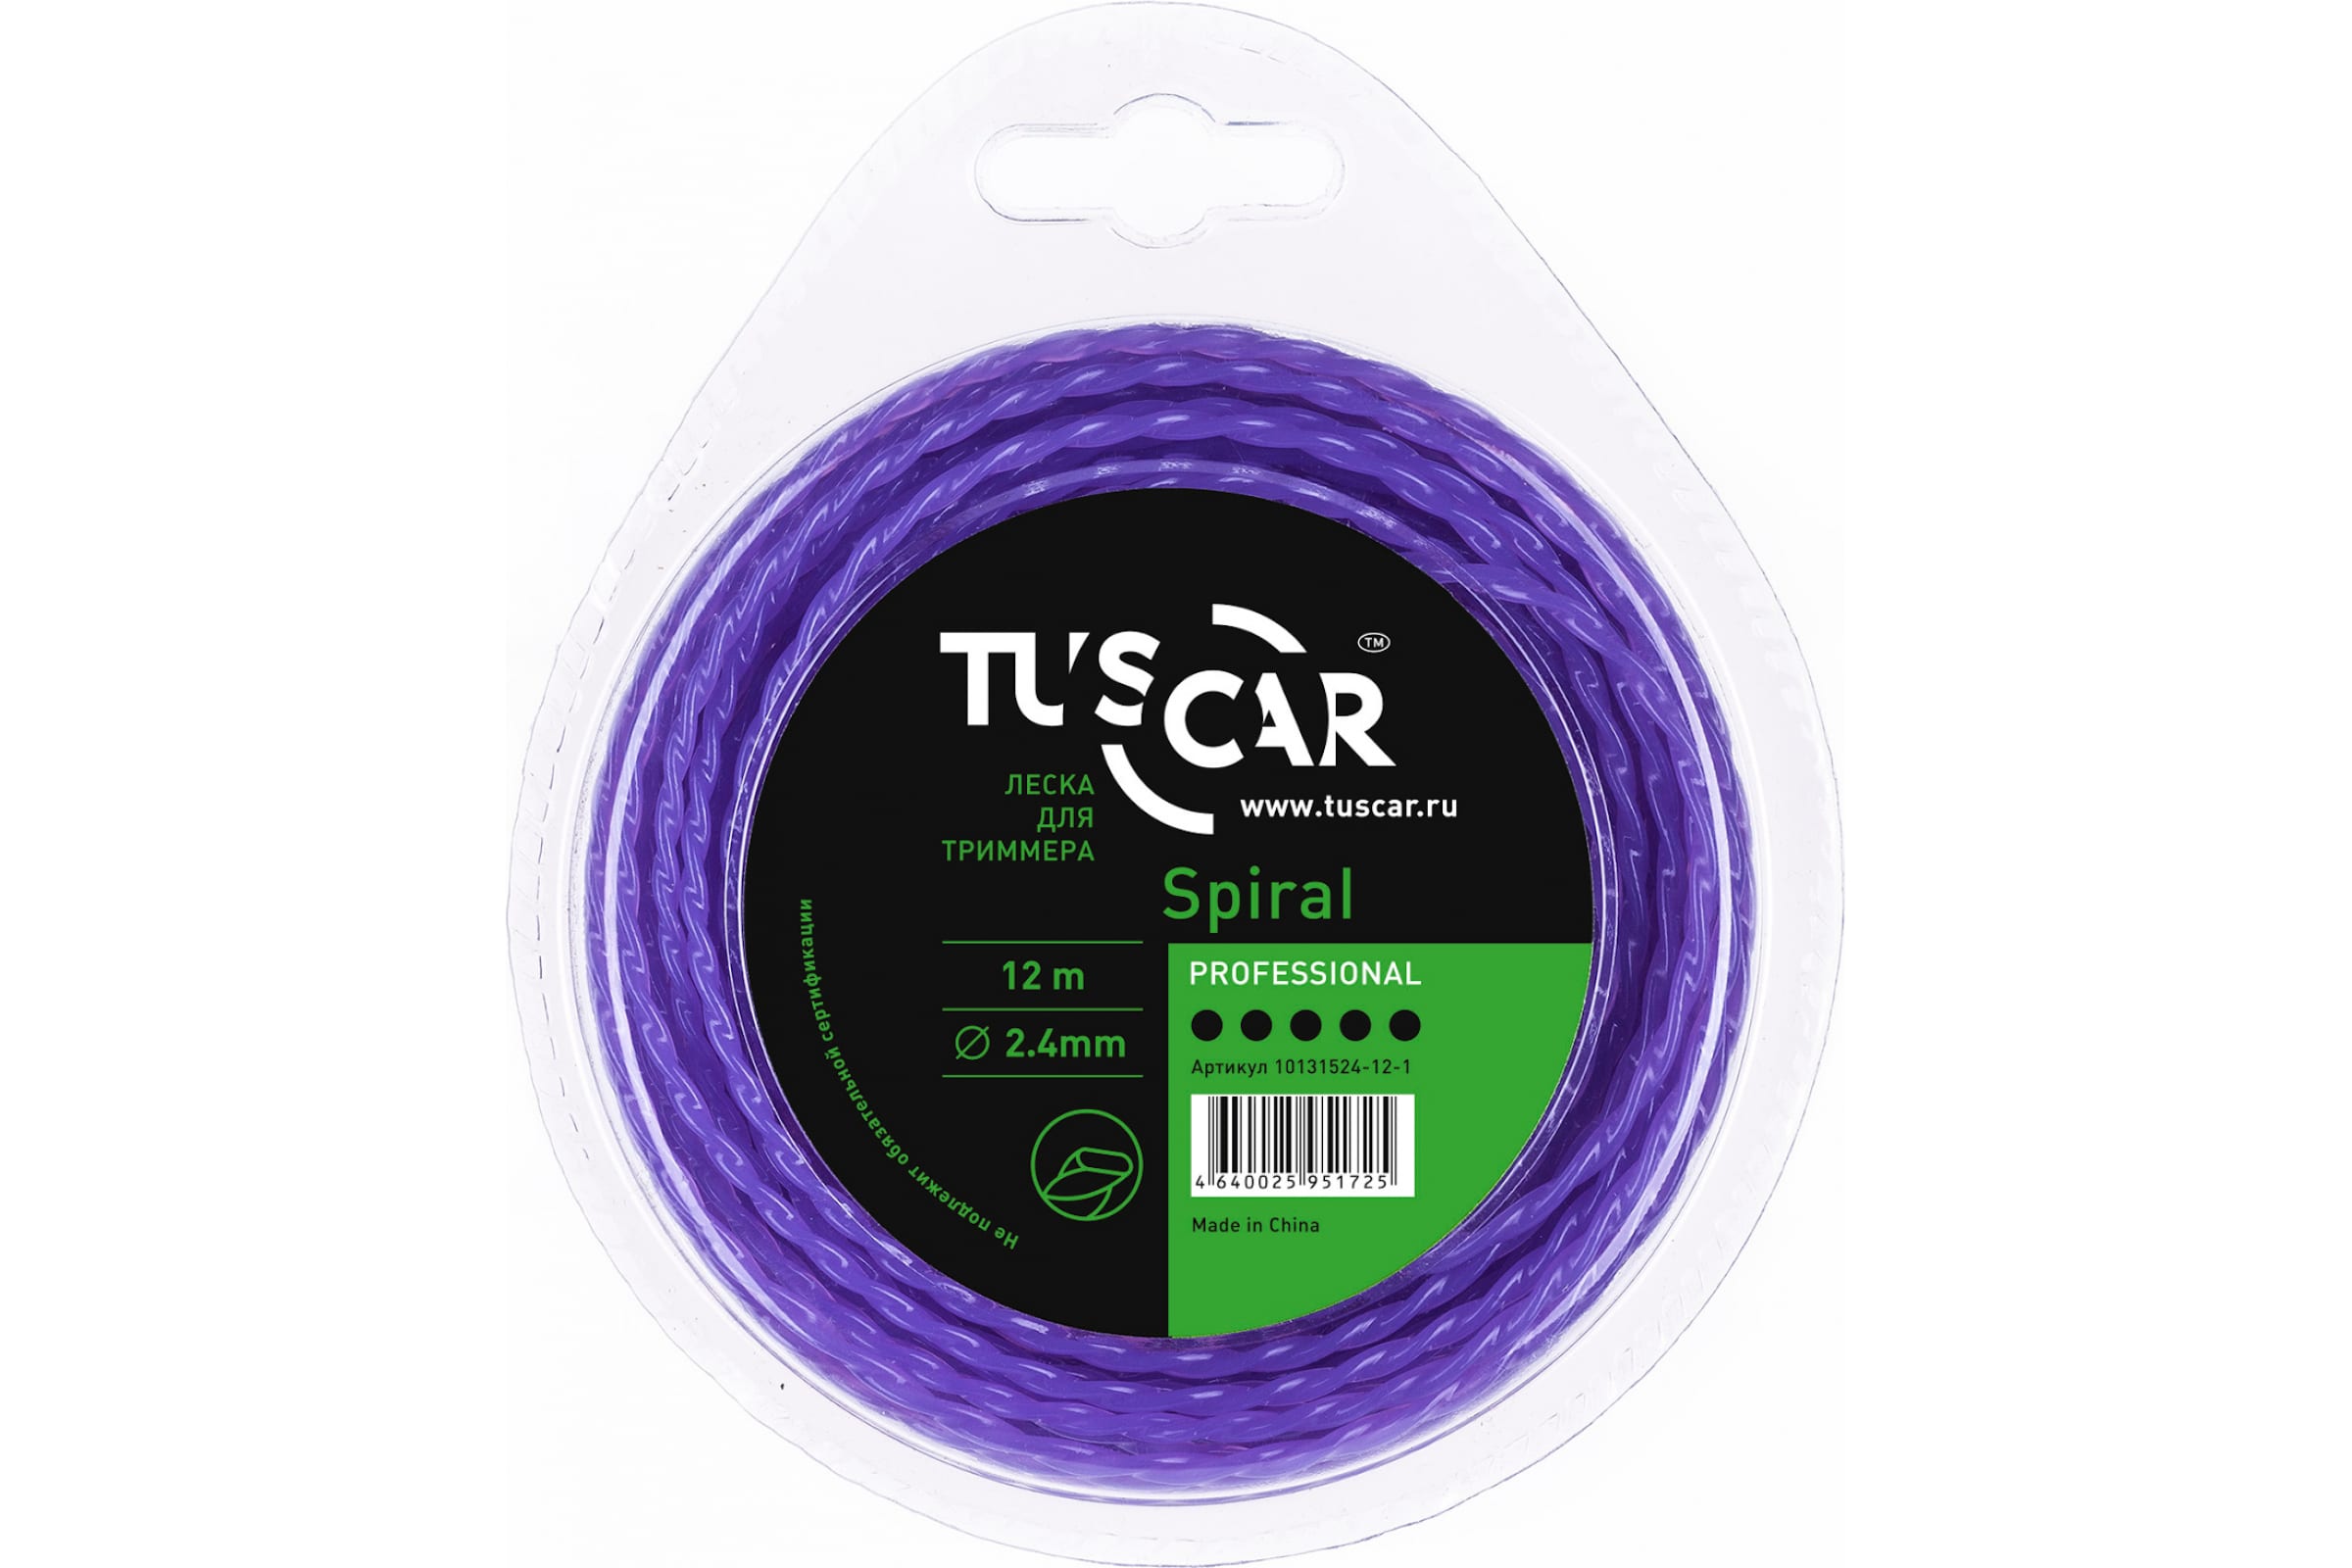 TUSCAR Леска для триммера Spiral, Professional, 2.4mmx12m 10131524-12-1